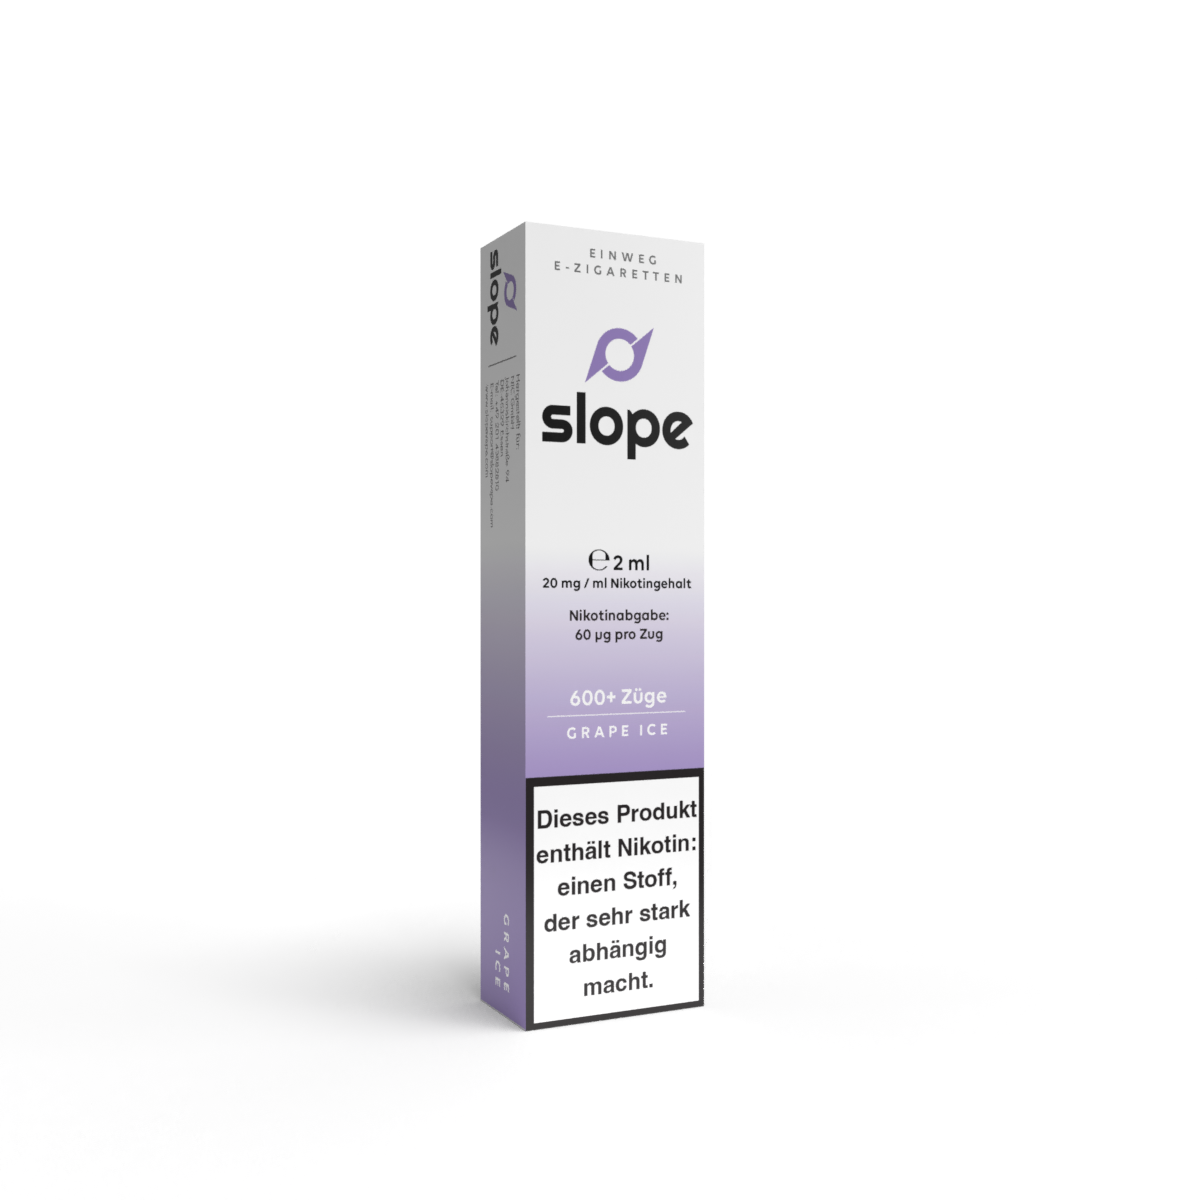 SLOPE Einweg E Zigarette 20mg/ml - Vape Stick - Grape Ice 